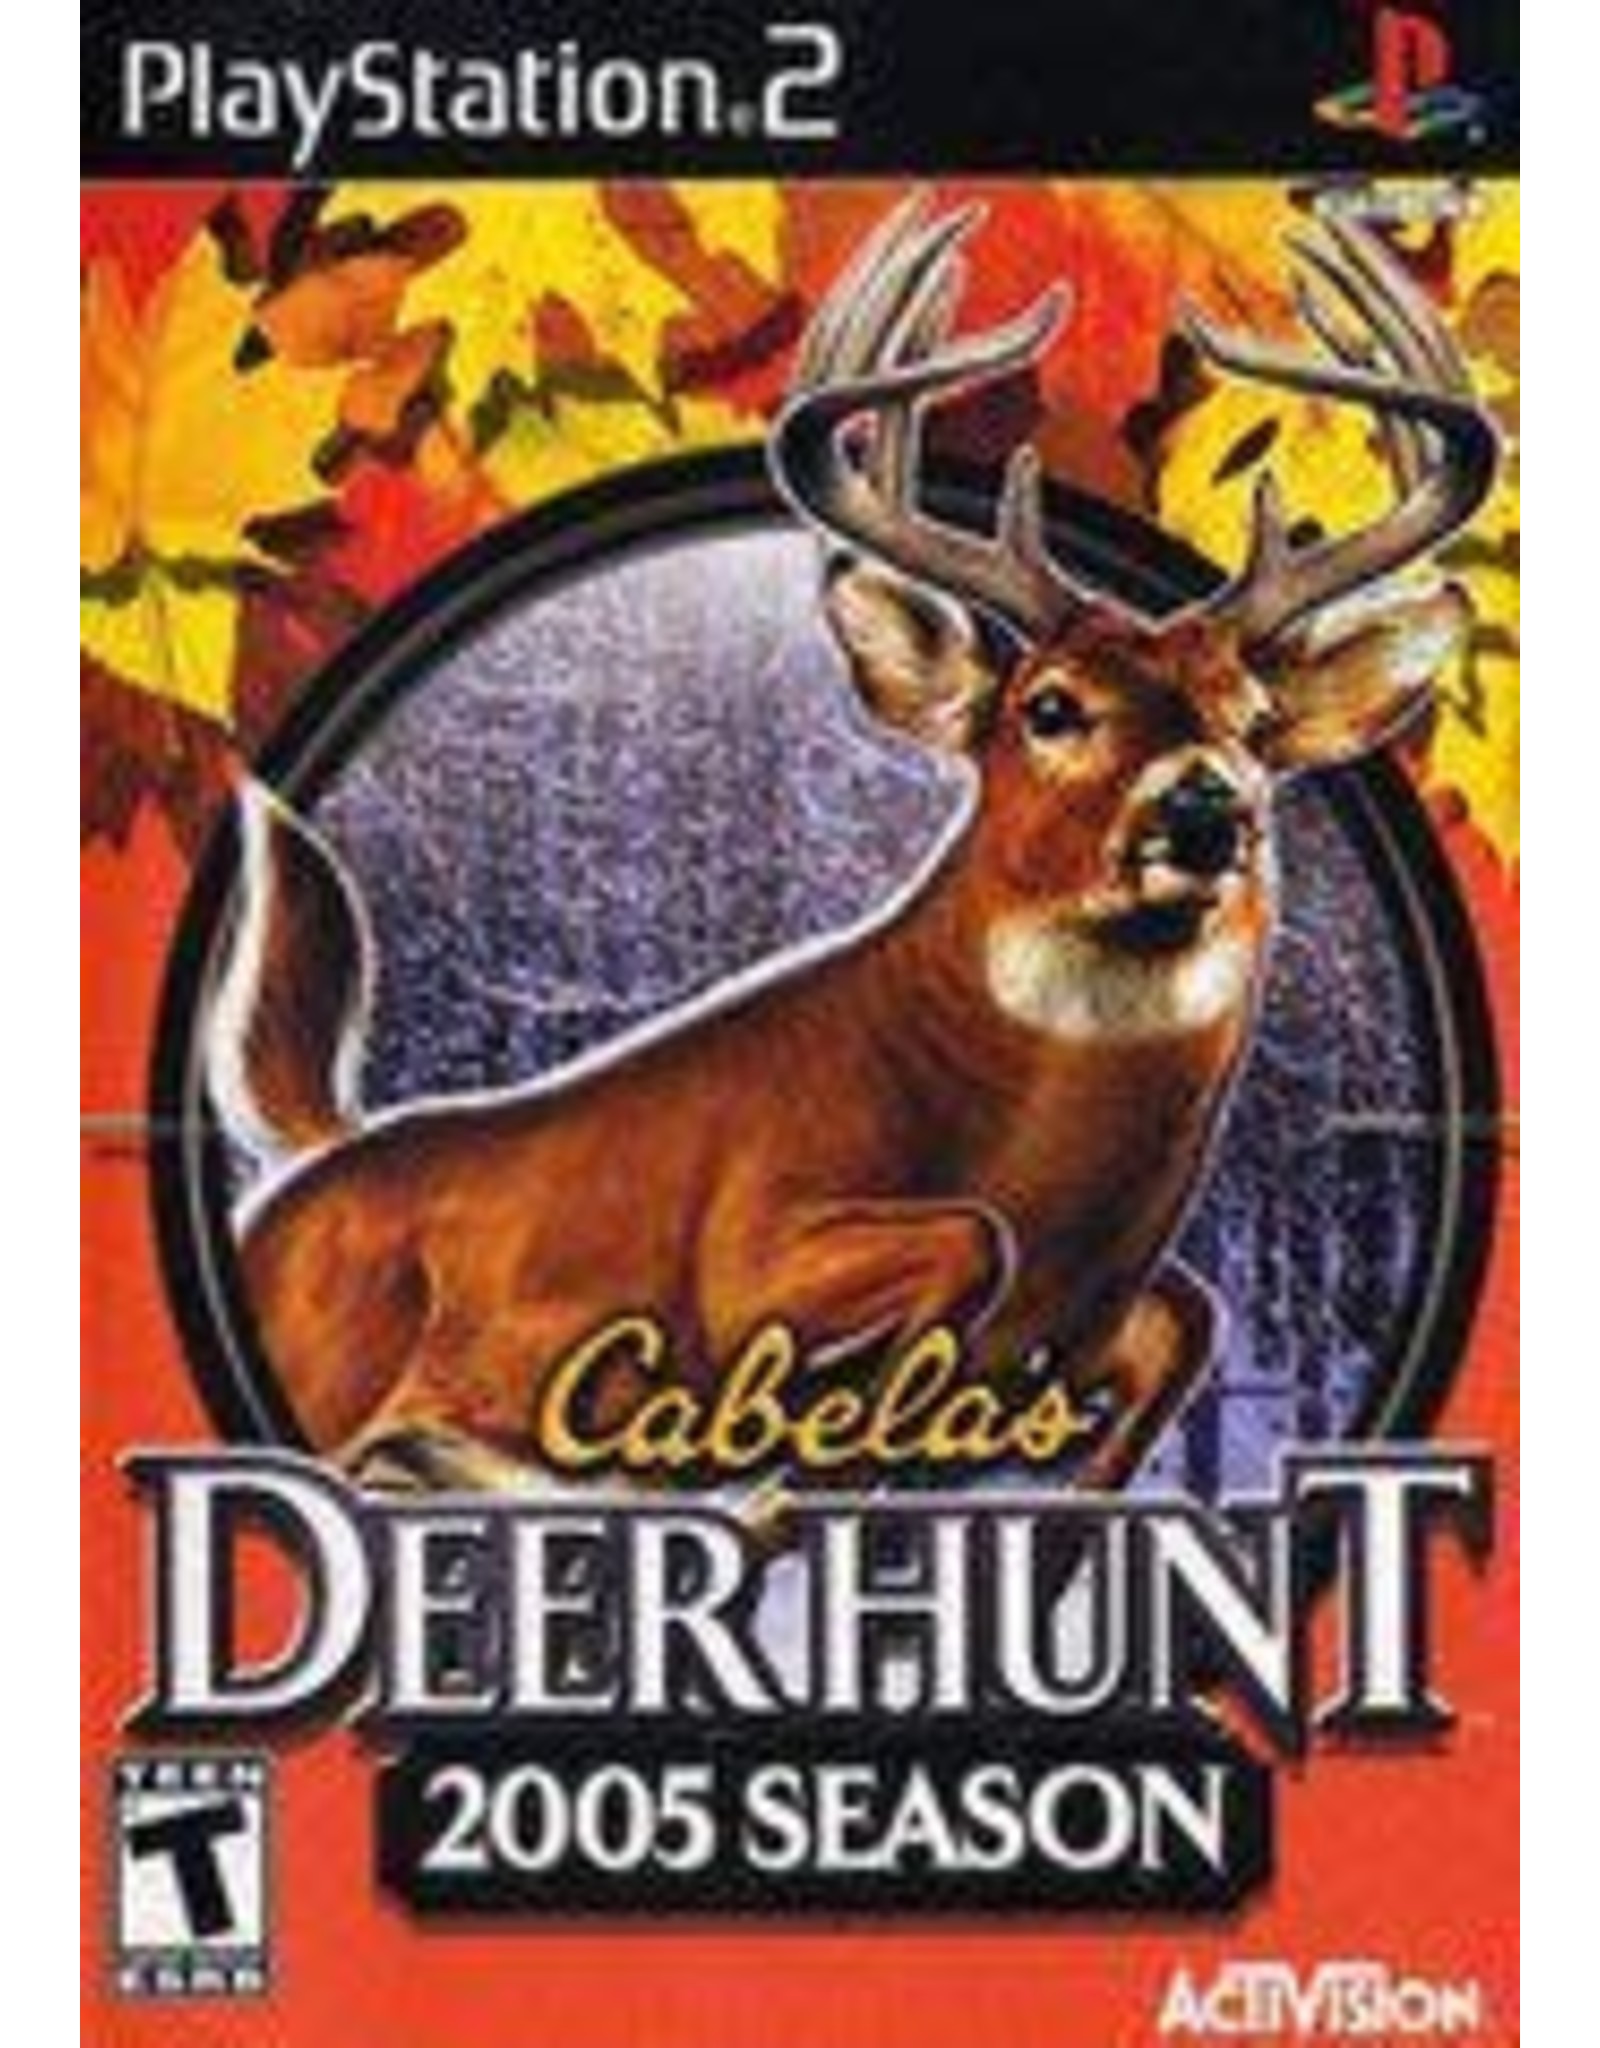 Playstation 2 Cabela's Deer Hunt 2005 (CiB)